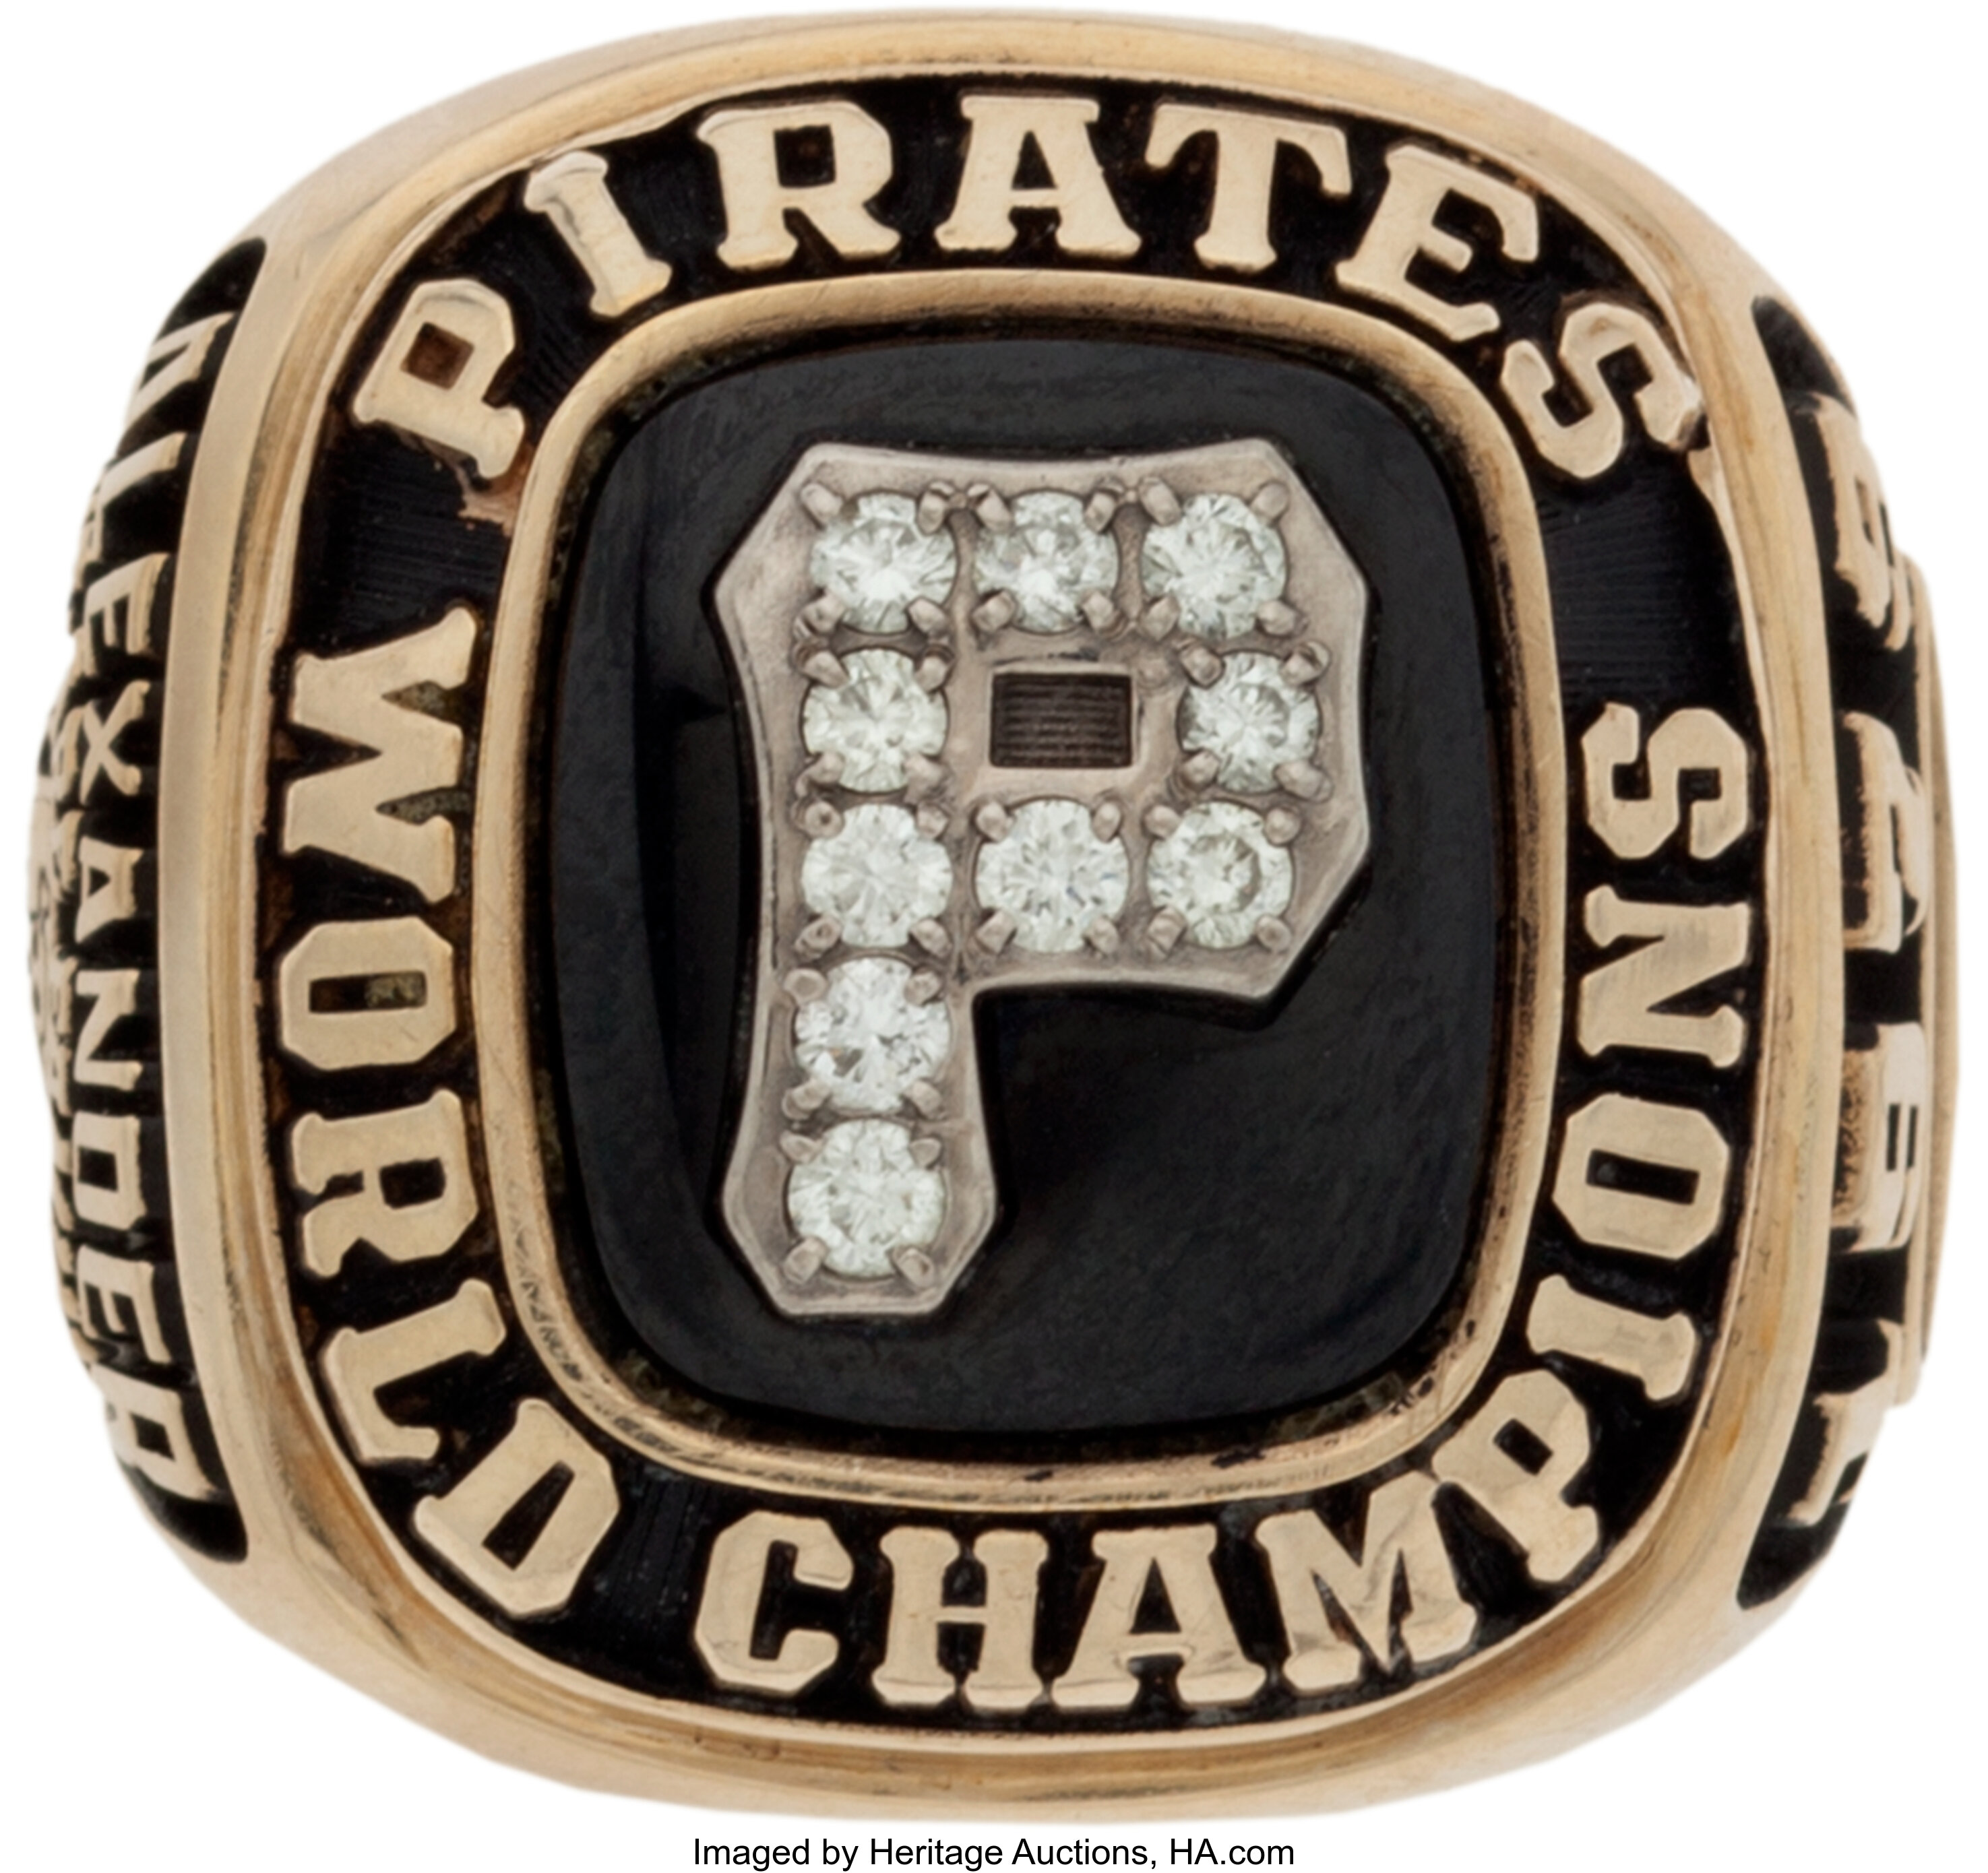 1979 Pittsburgh Pirates World Championship Ring Presented to Matt